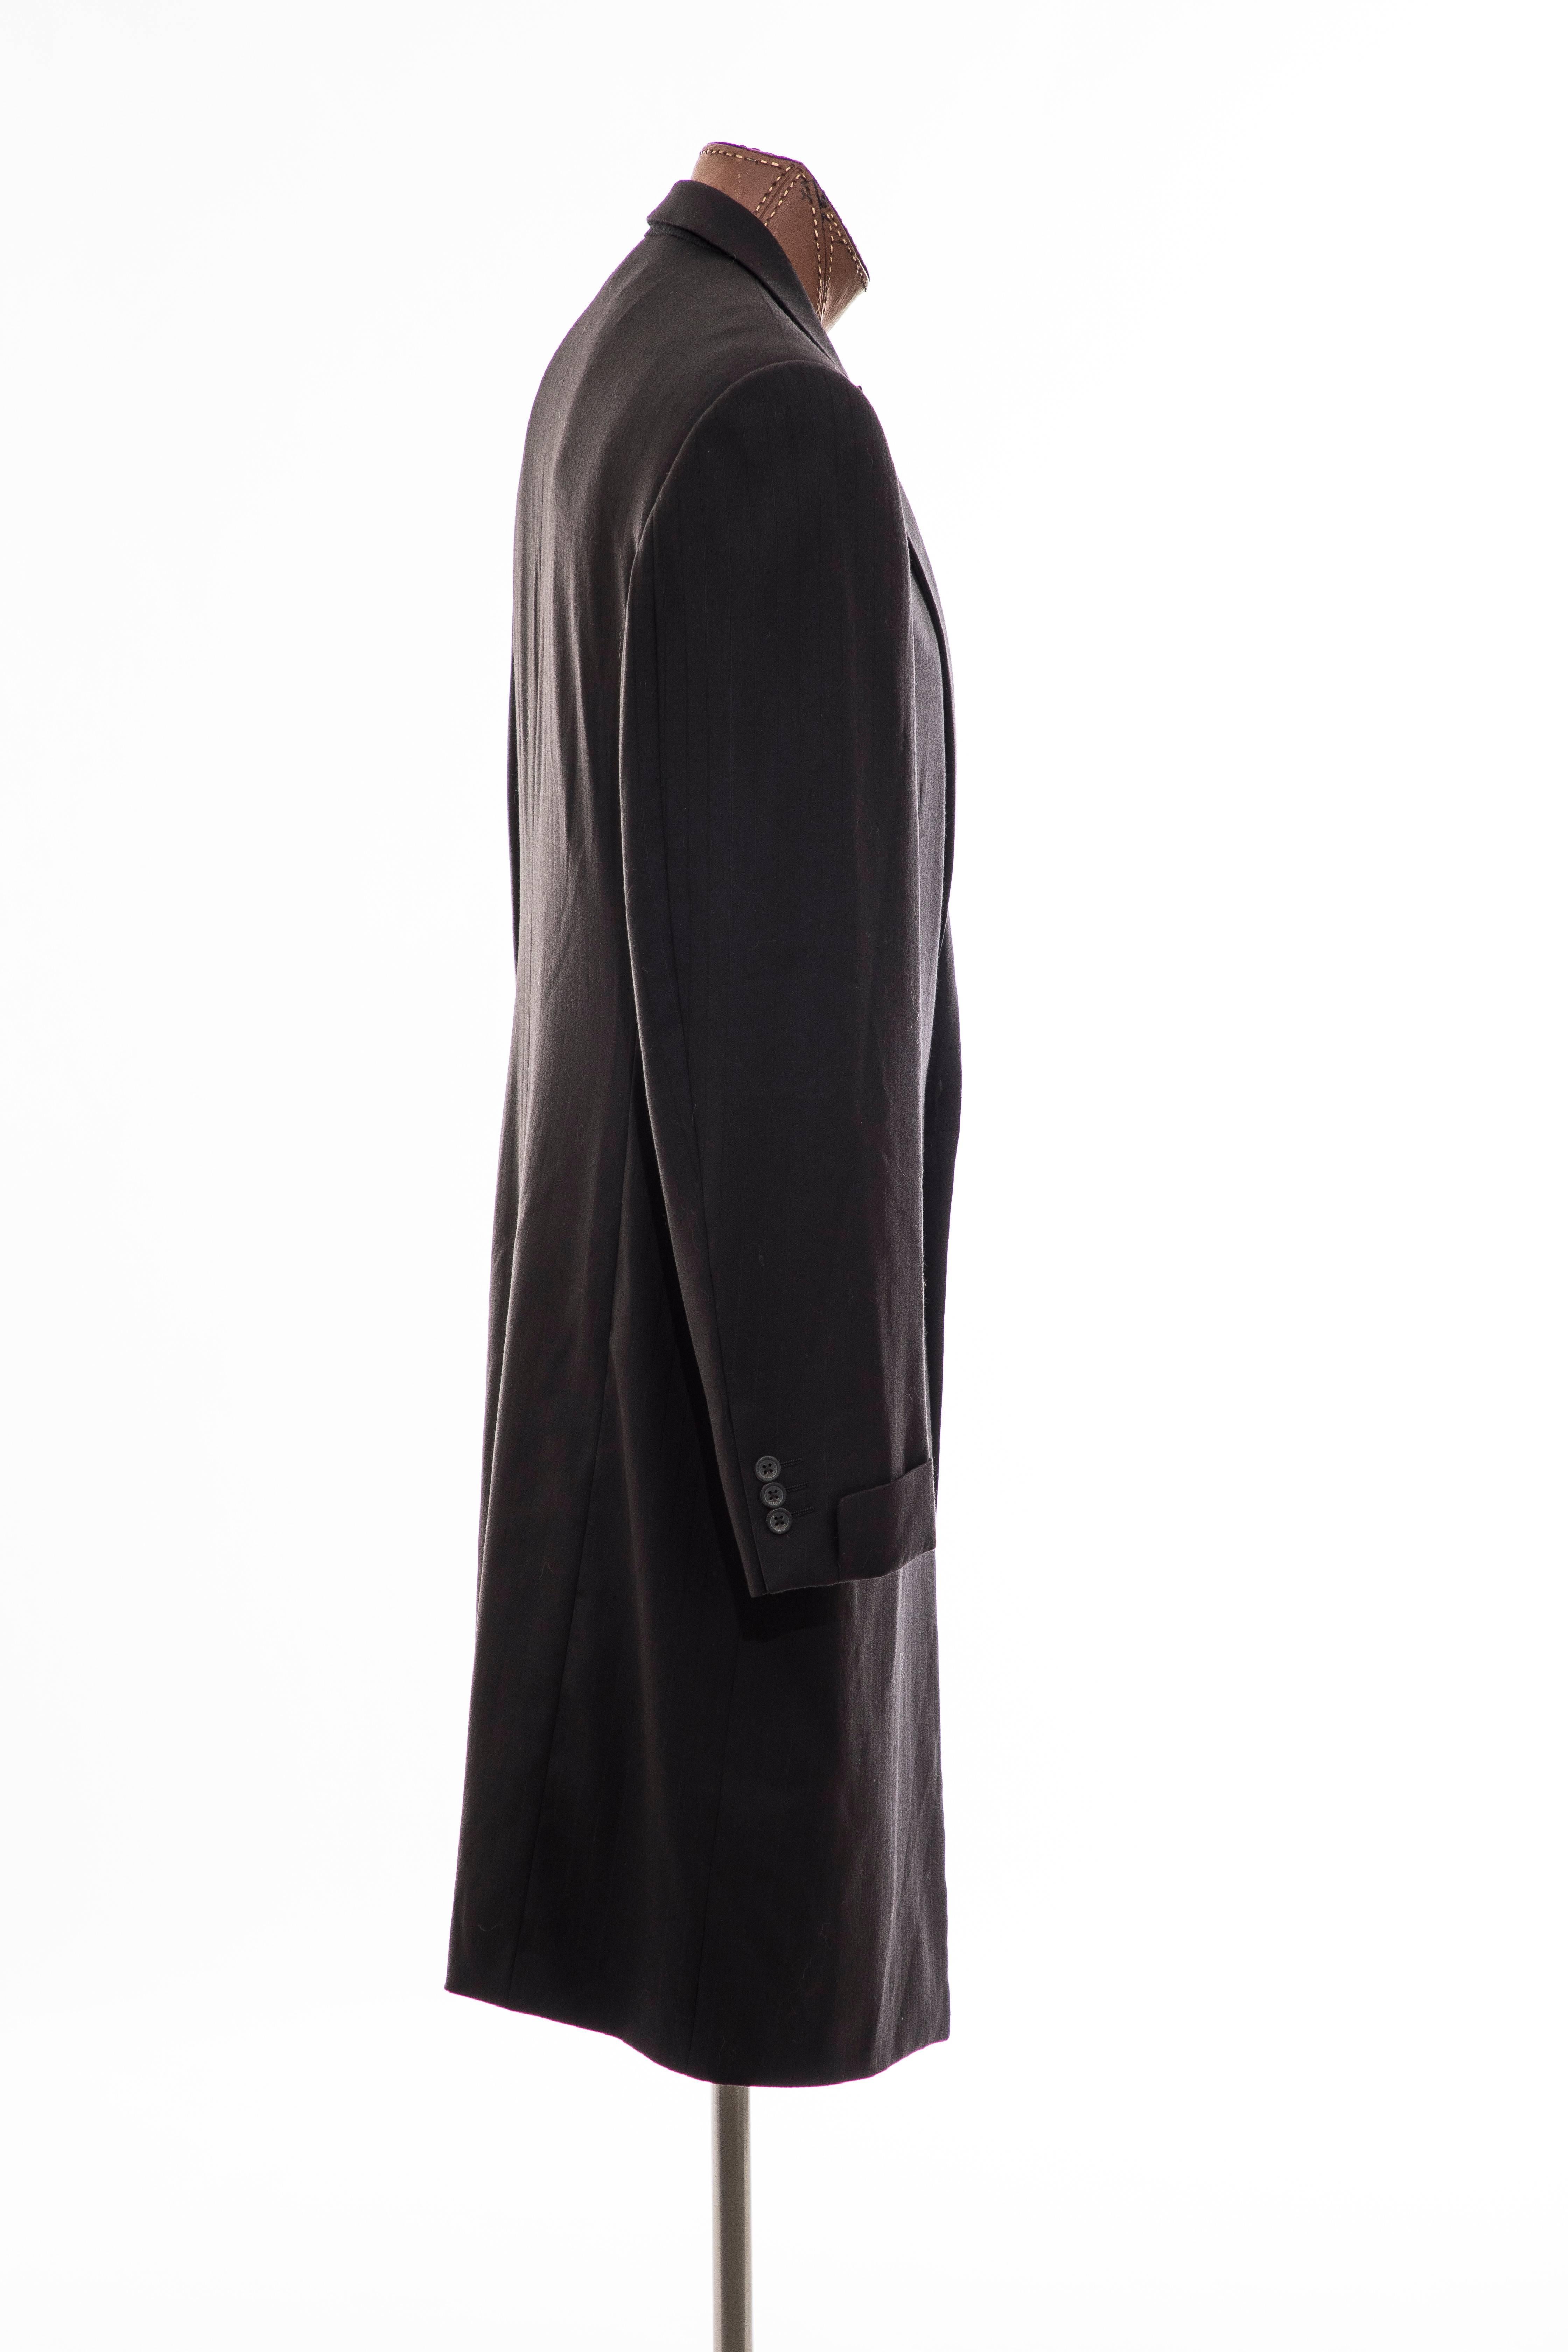 Gianni Versace Couture Men's Black Pinstriped Wool Overcoat, Circa 1990's Herren im Angebot